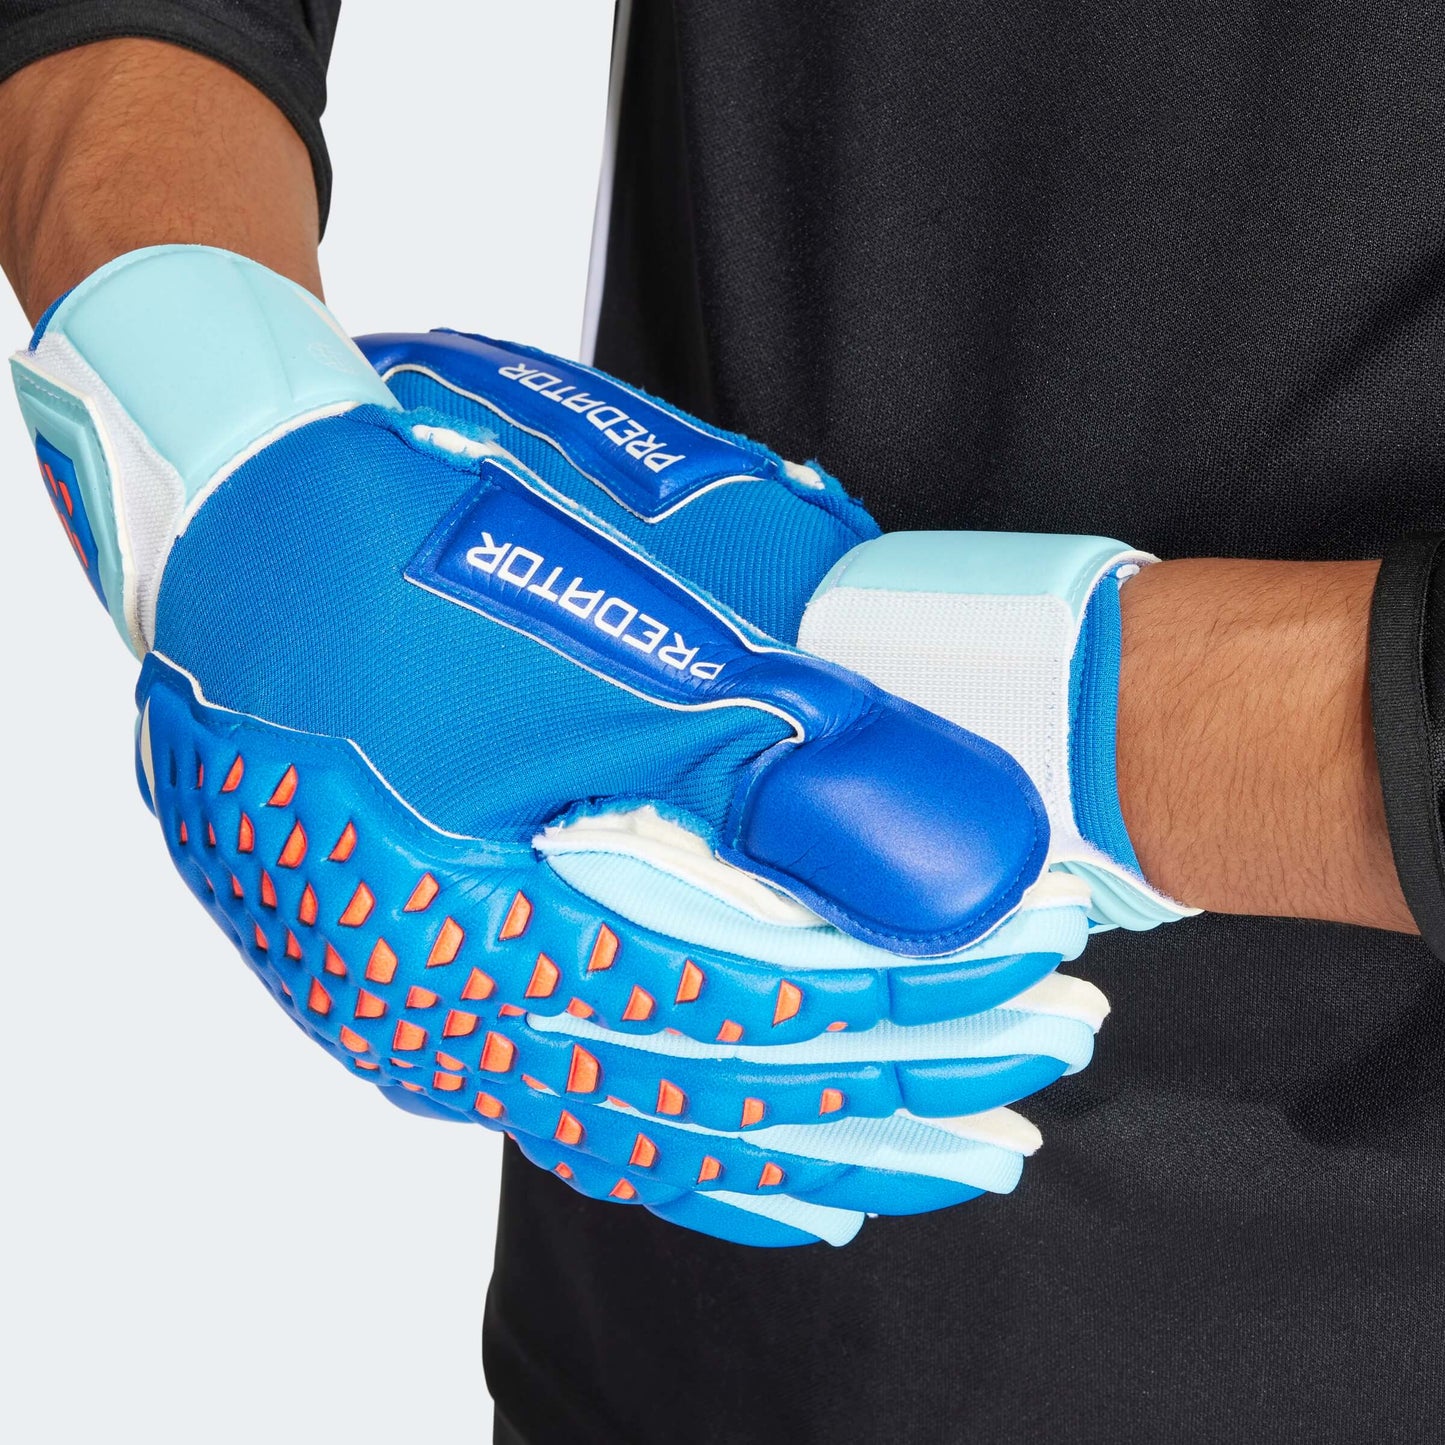 Adidas Predator Match Fingersave - Blue Royal/Bliss Blue/White